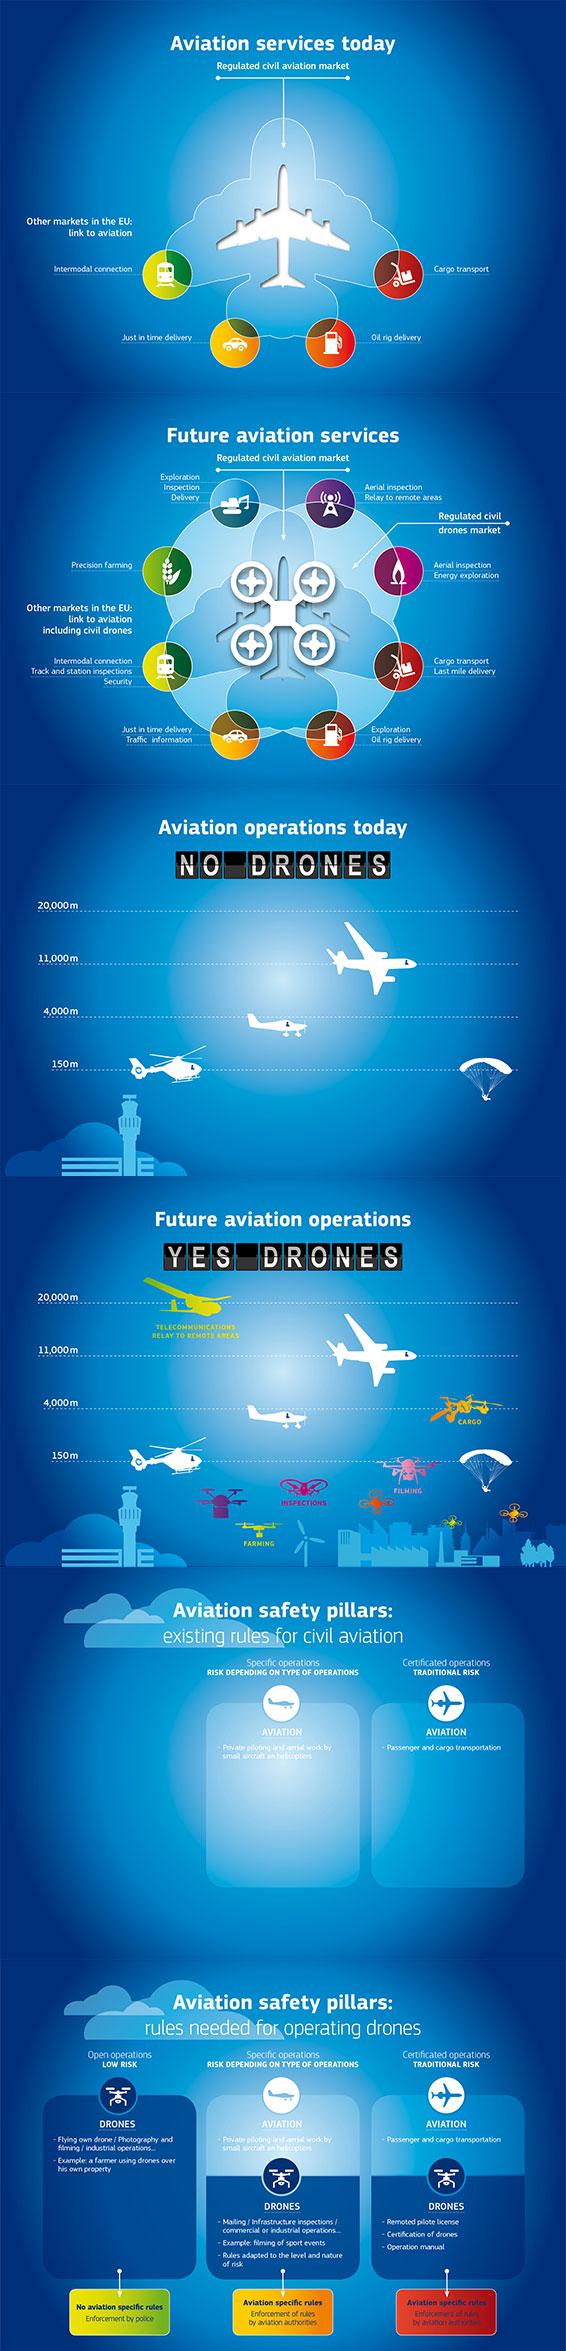 drones-infographic.jpg